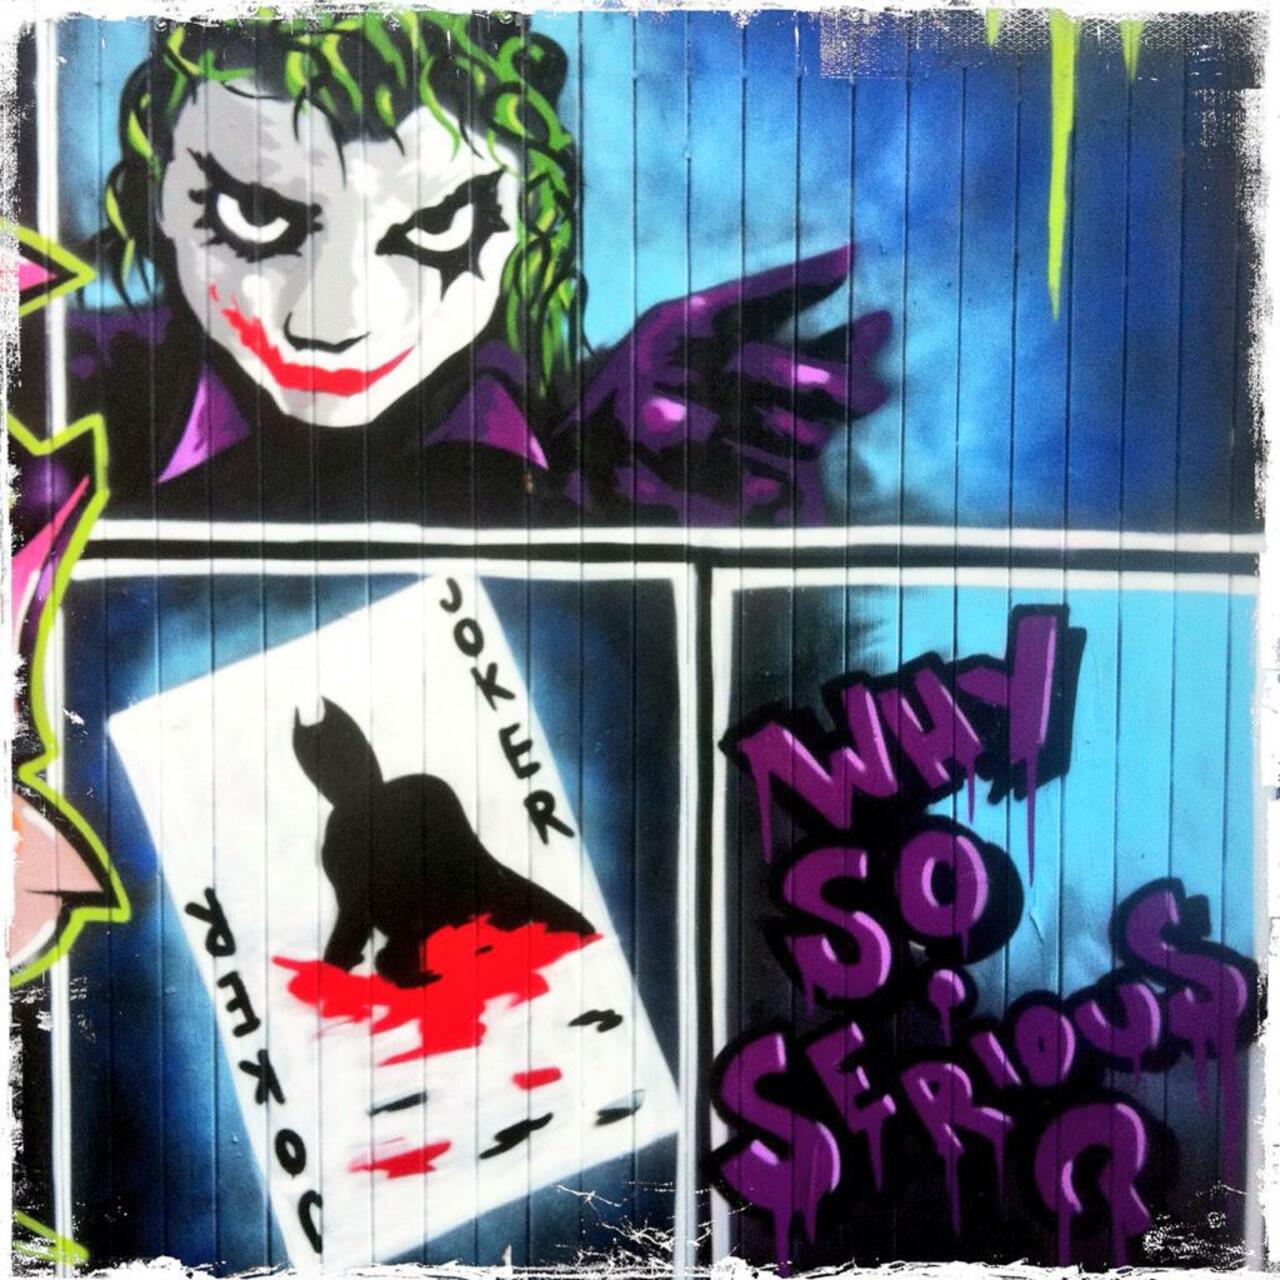 Why so serious?

New streetart on Fashion Street #Joker #art #Graffiti http://t.co/BNrfz7XnuC